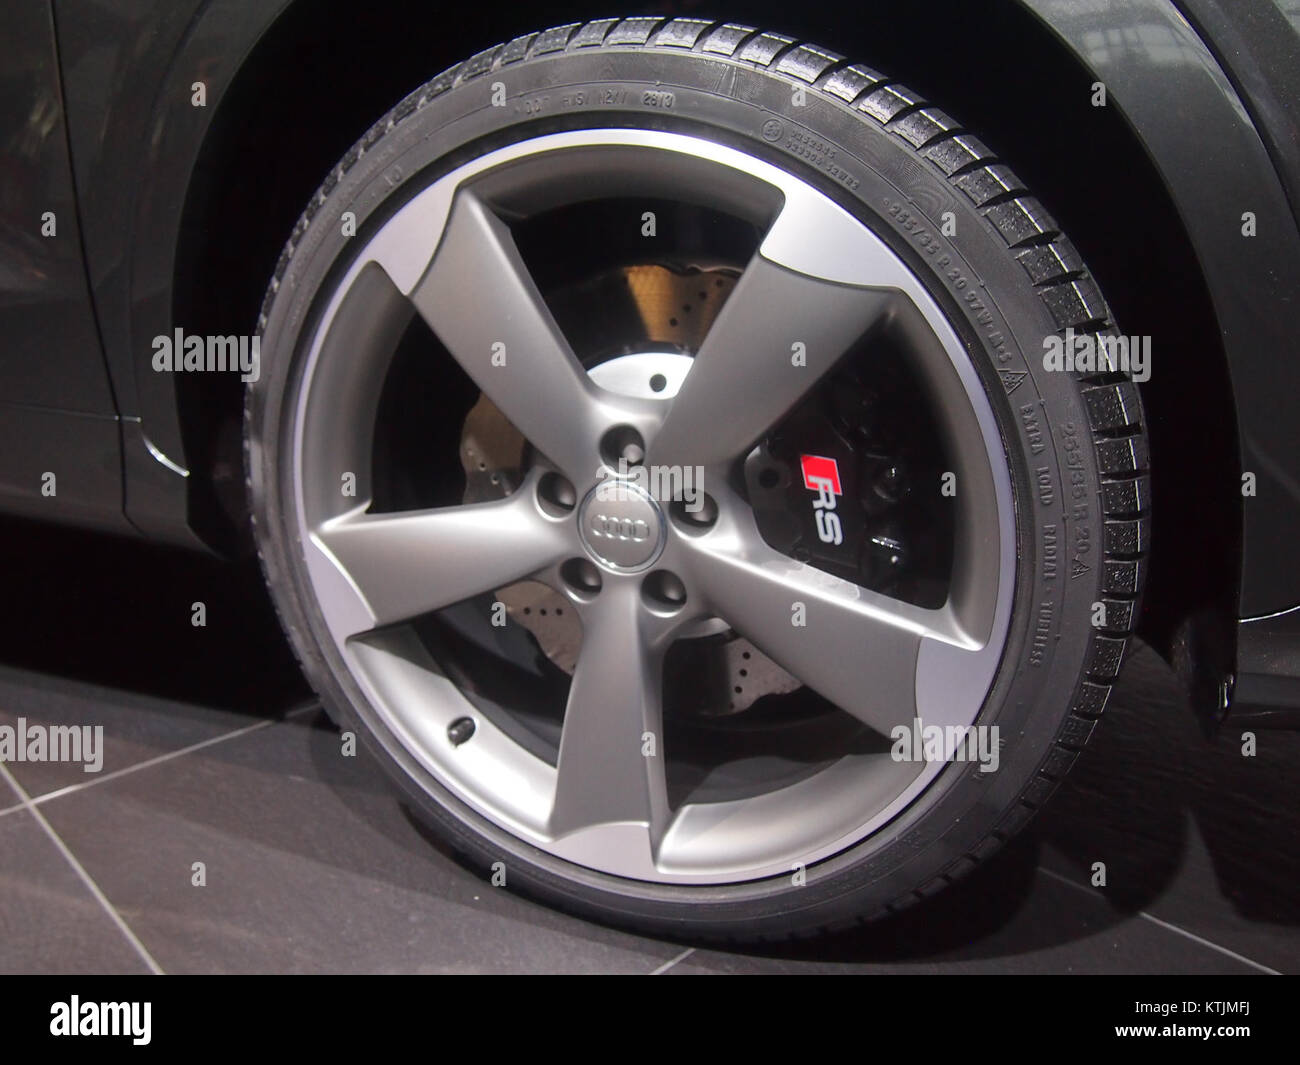 Audi RS Felge mit Bremssattel Stockfotografie - Alamy